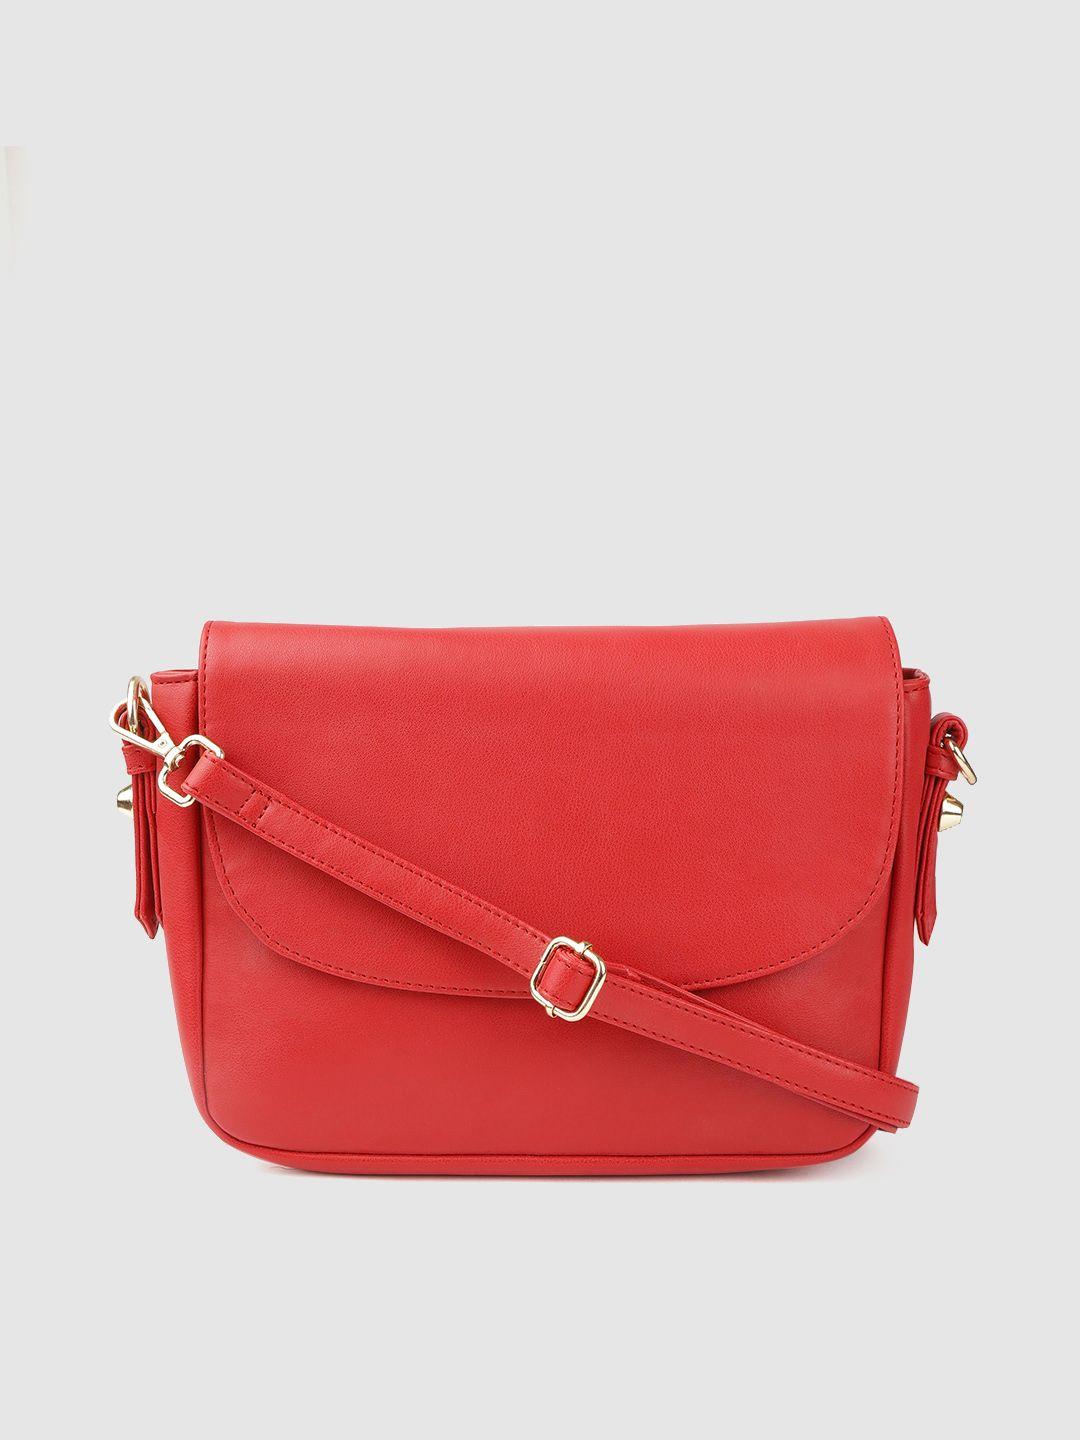 carlton london red solid sling bag